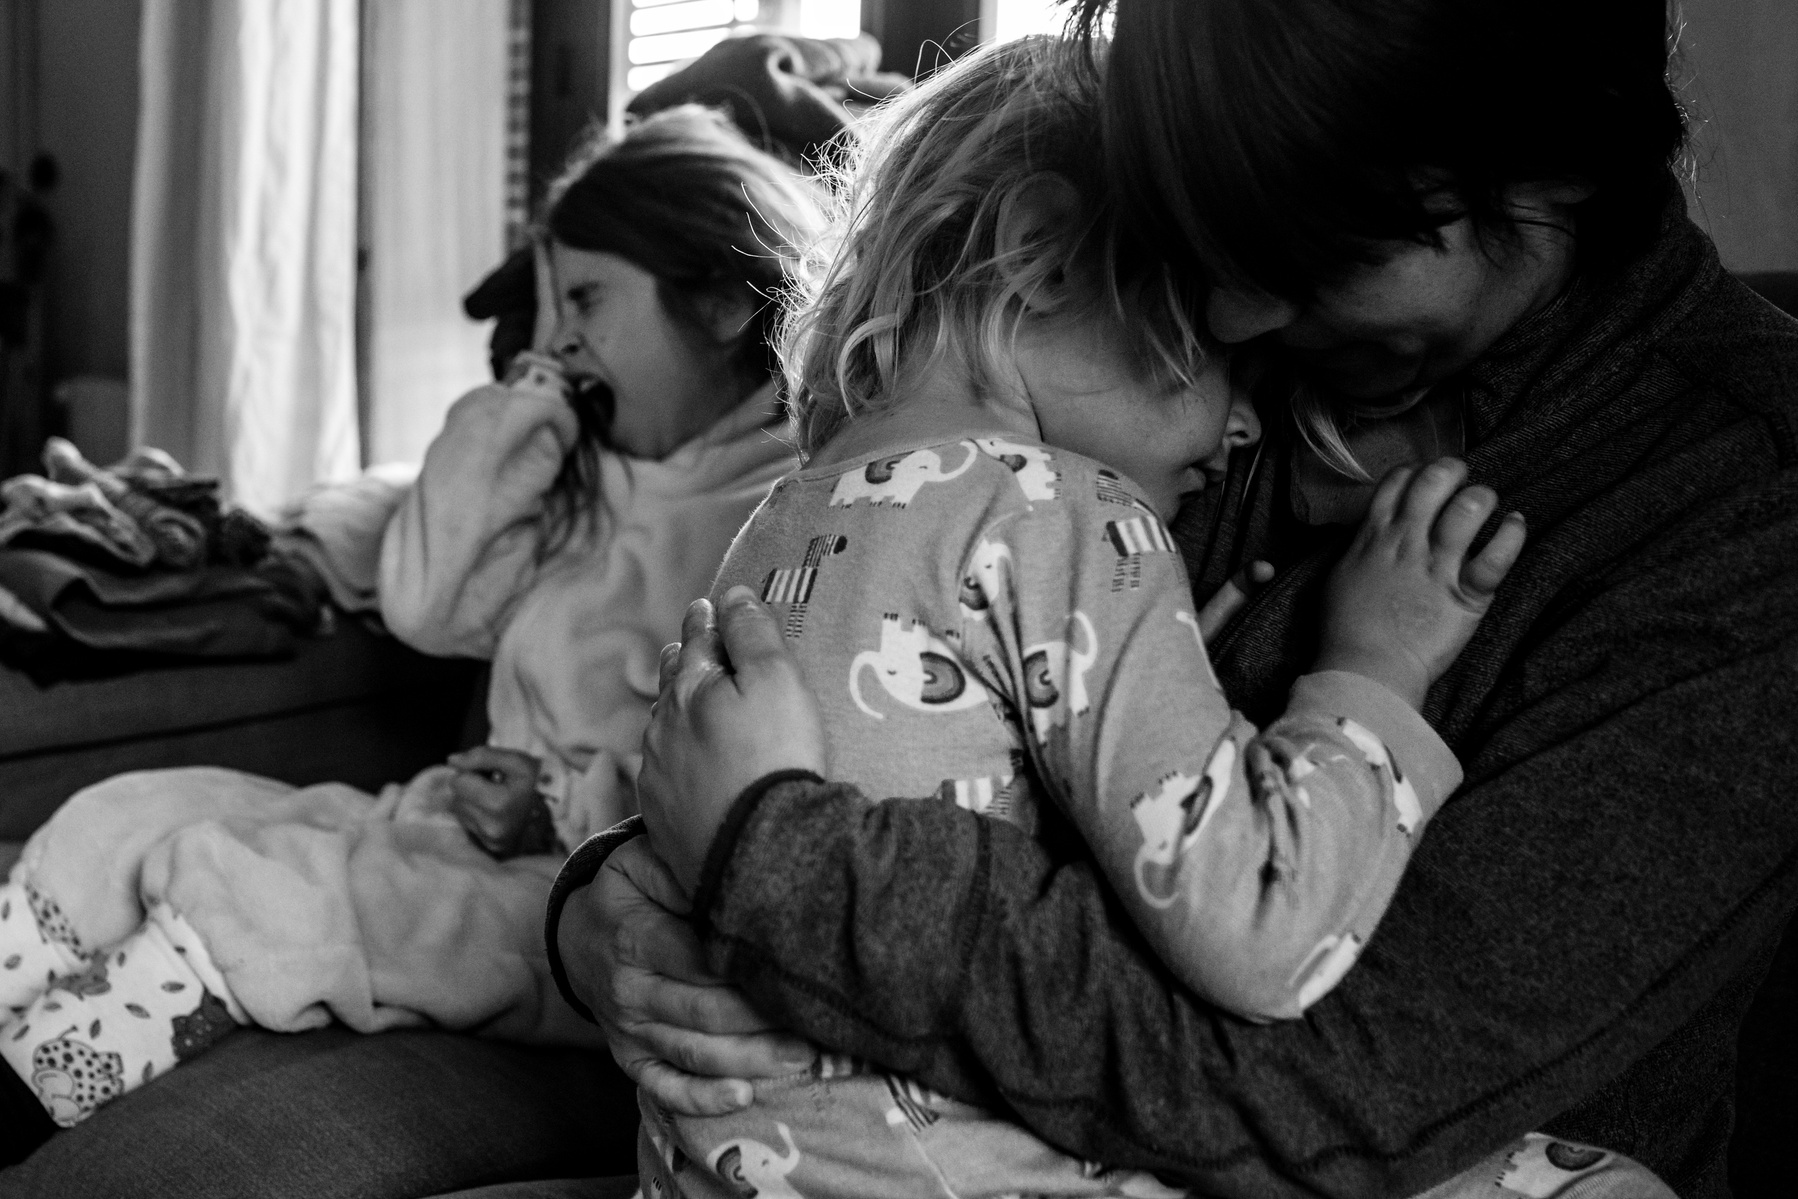 Mamá con sus dos hijos en pyjama,
Manuela Franjou family photography